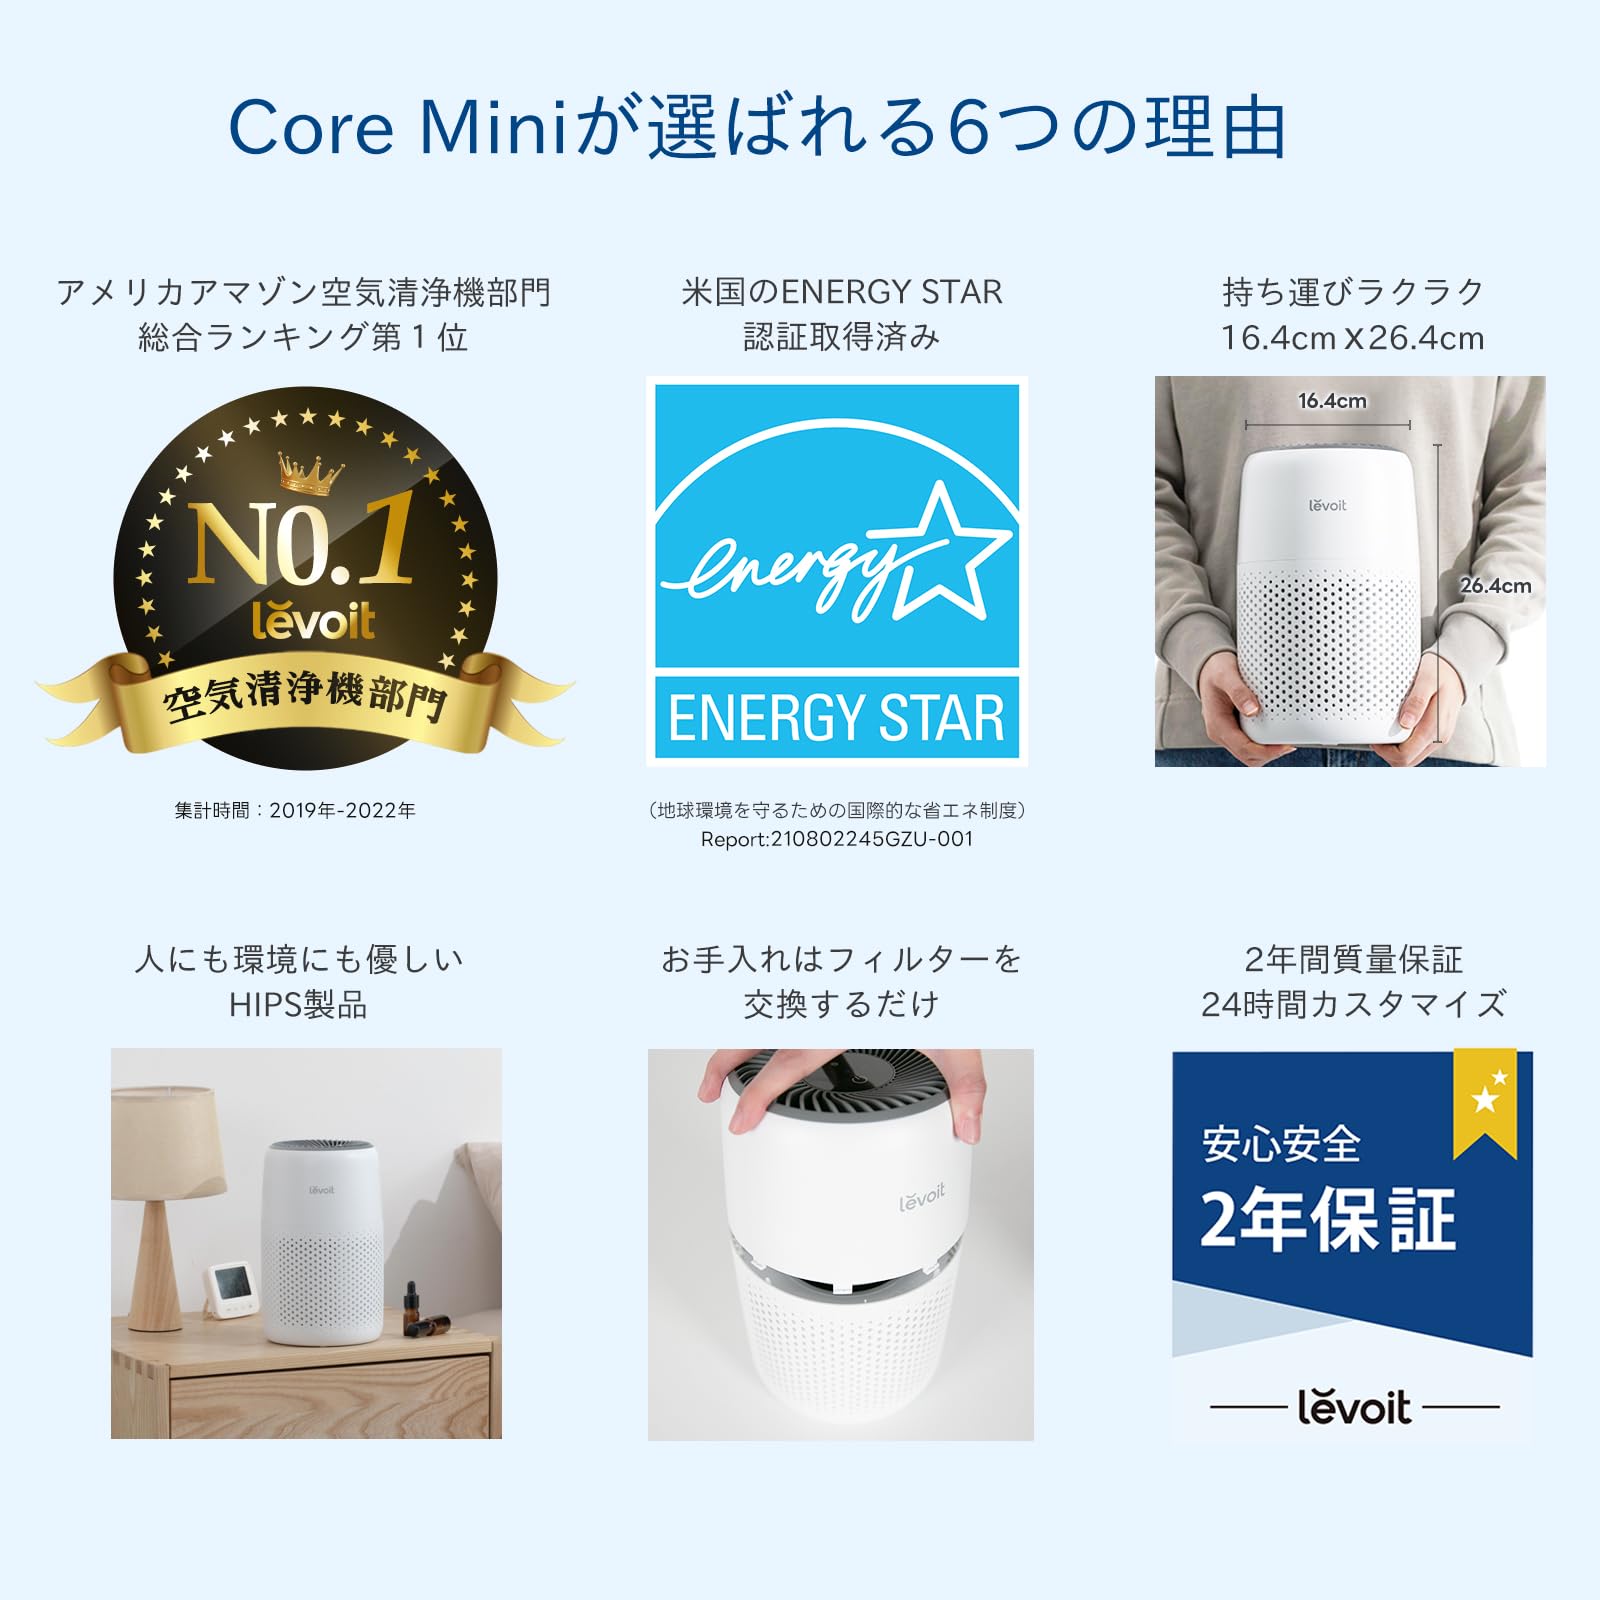 Levoit Core Mini 空気清浄機